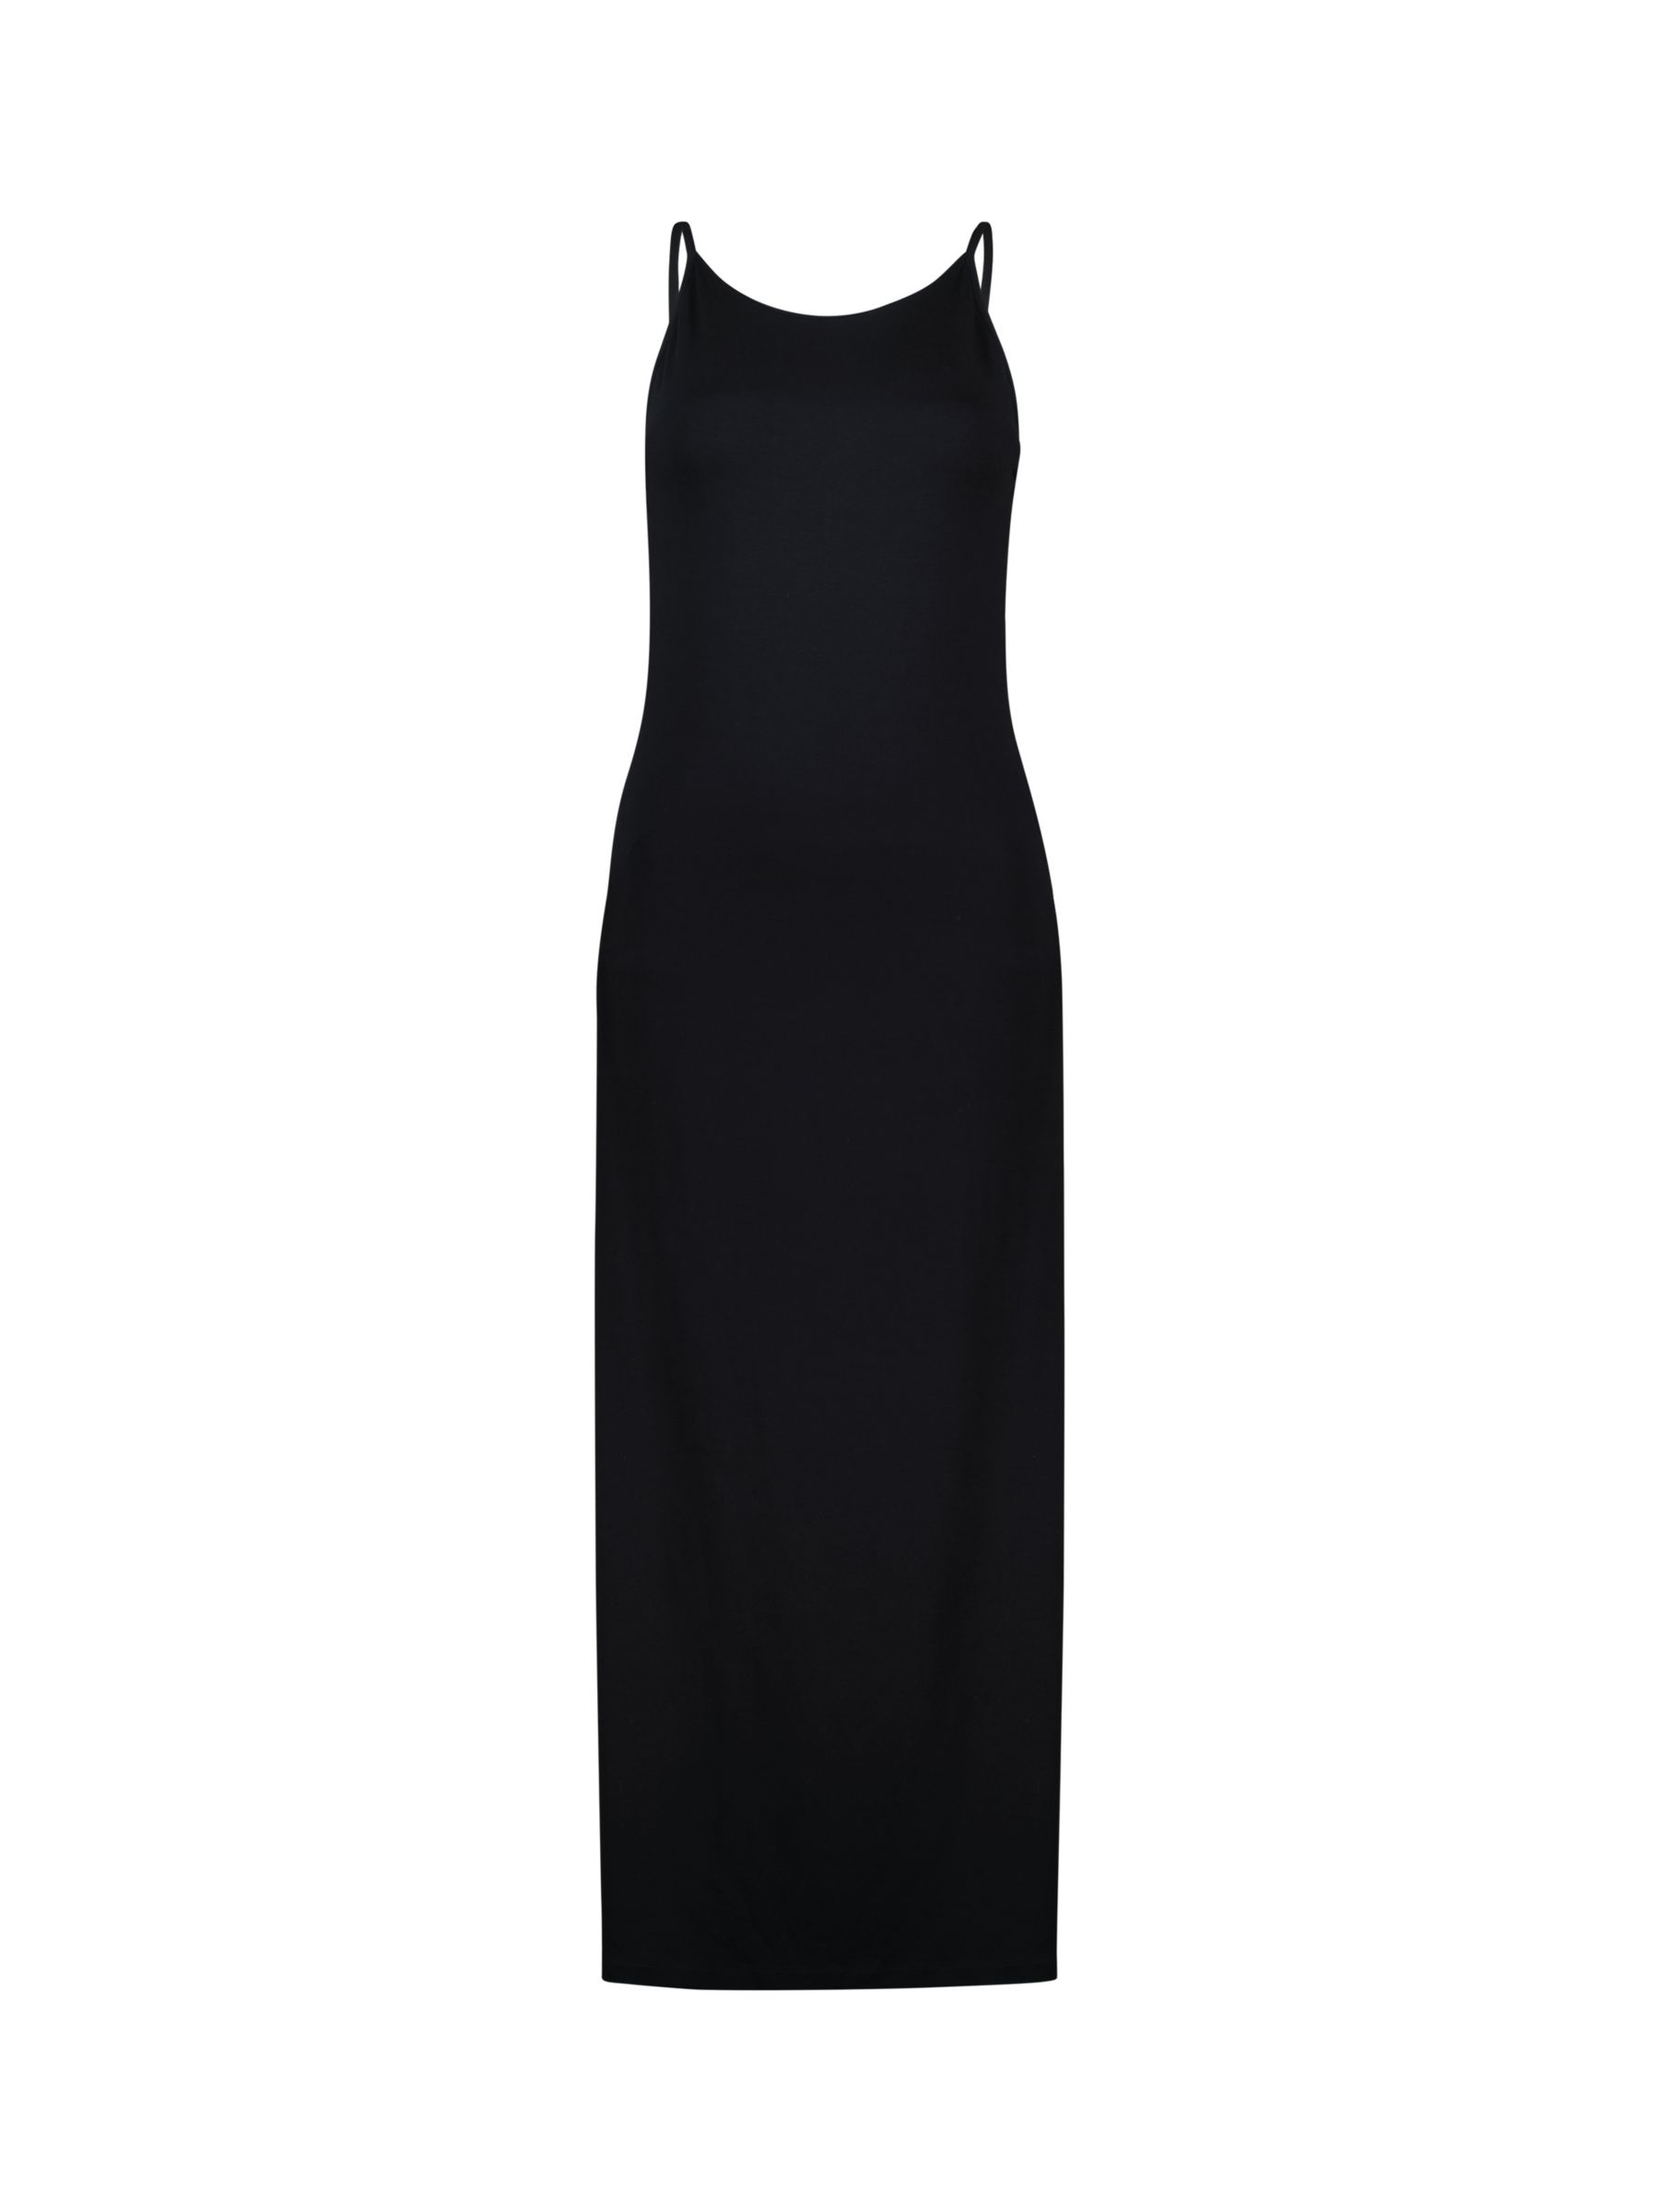 Baukjen Wren Jersey Dress, Caviar Black at John Lewis & Partners